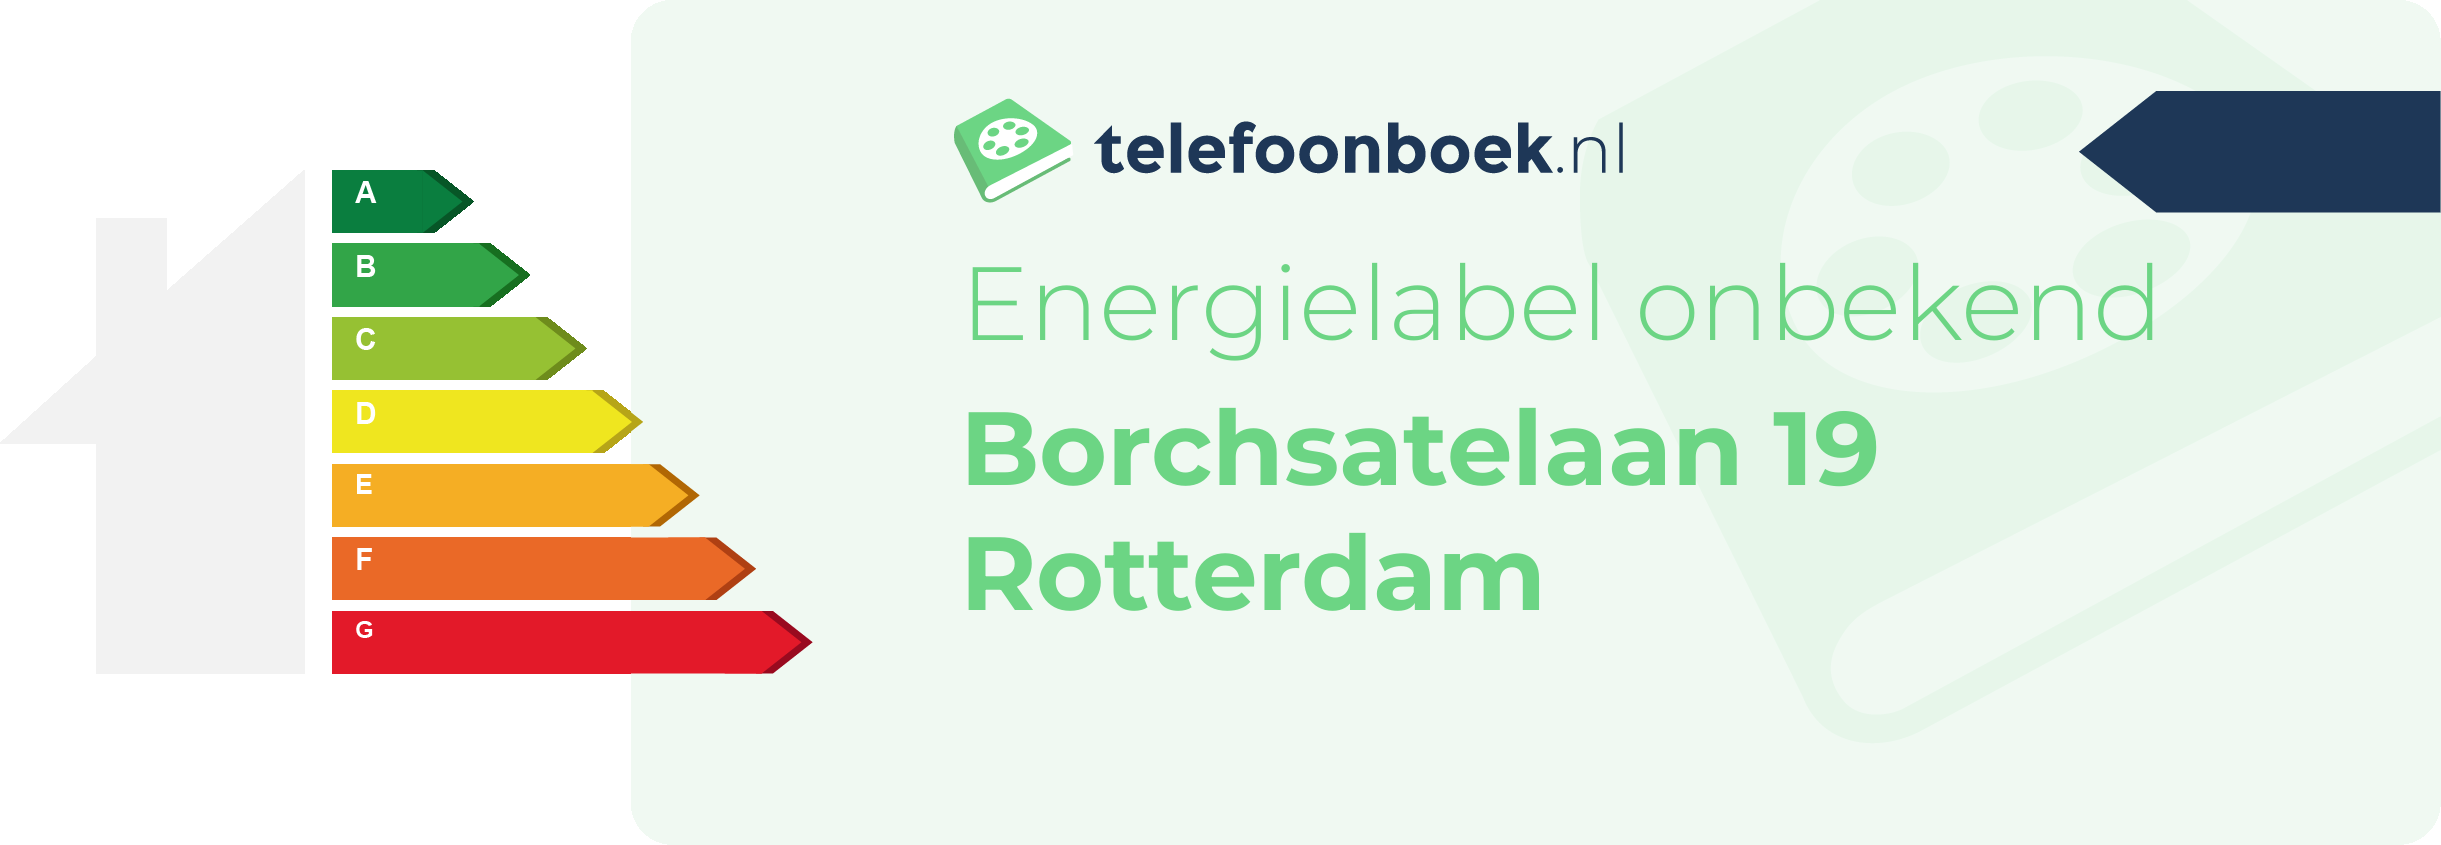 Energielabel Borchsatelaan 19 Rotterdam